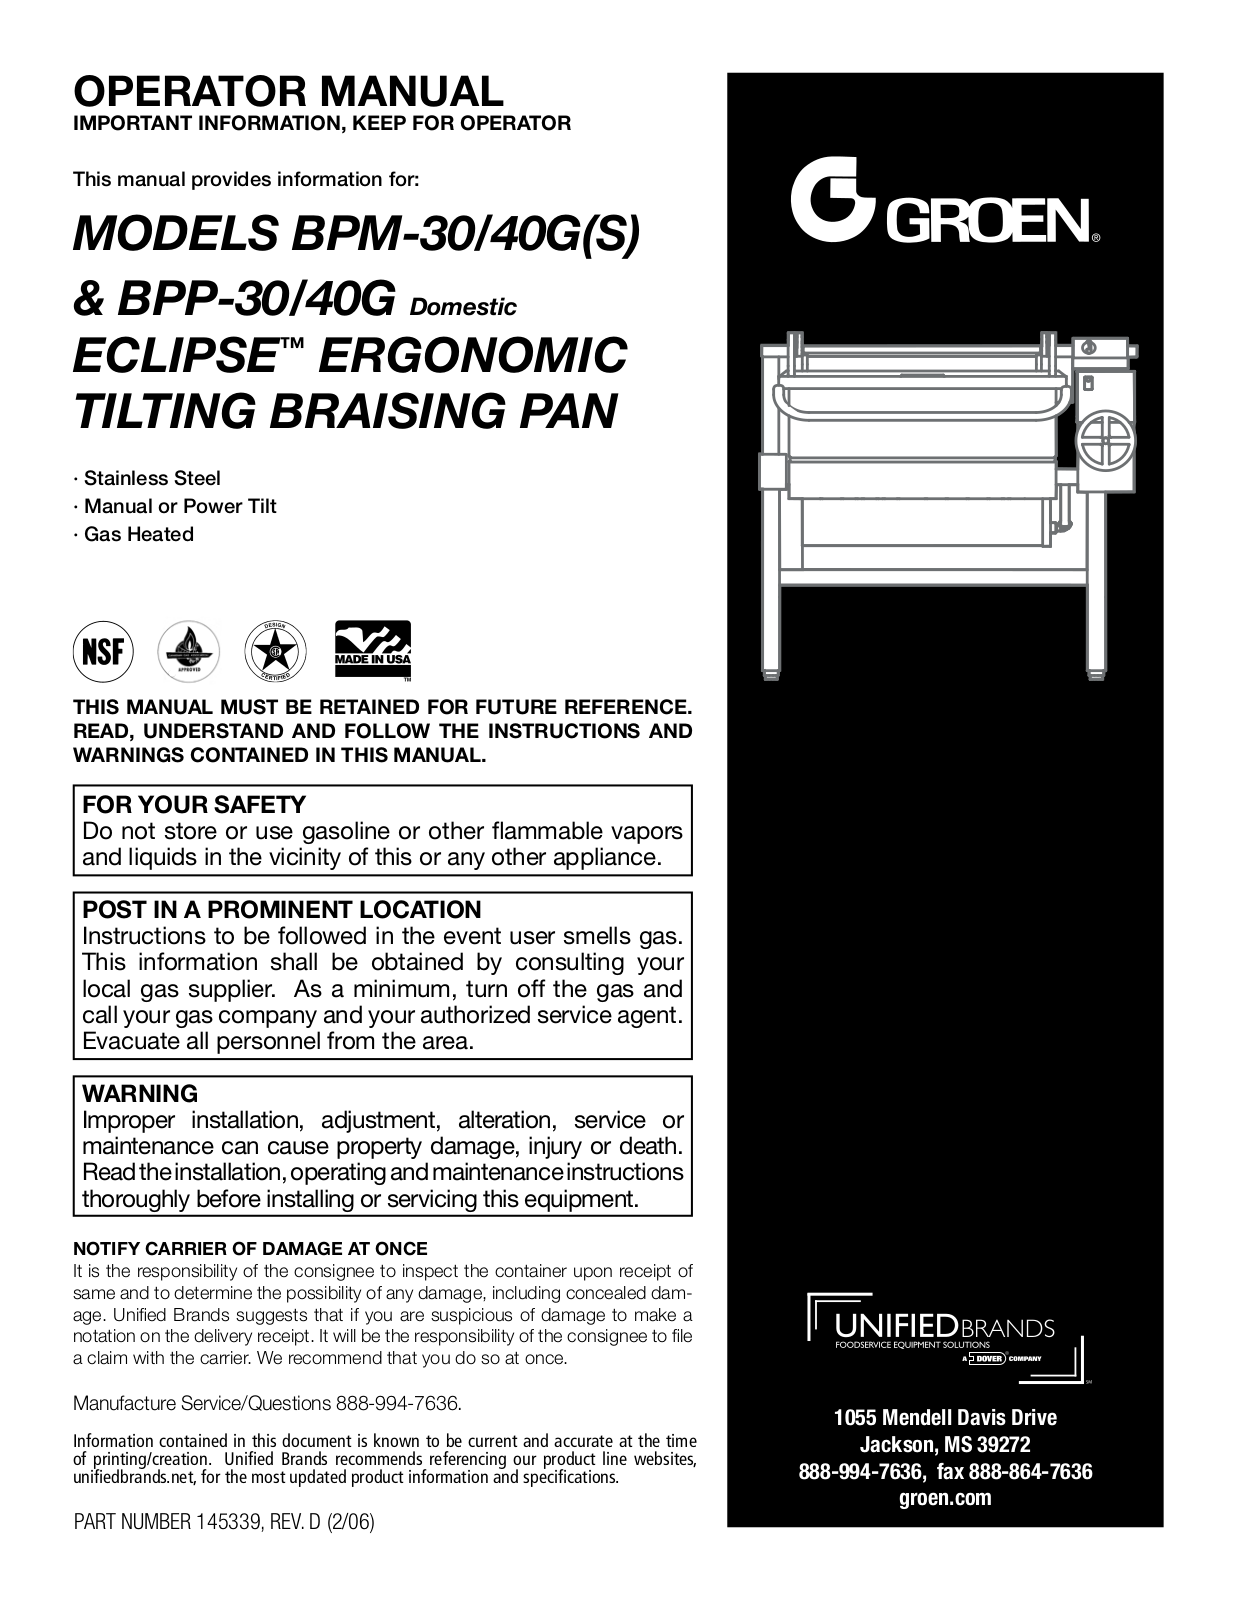 Groen BPM-30G Service Manual